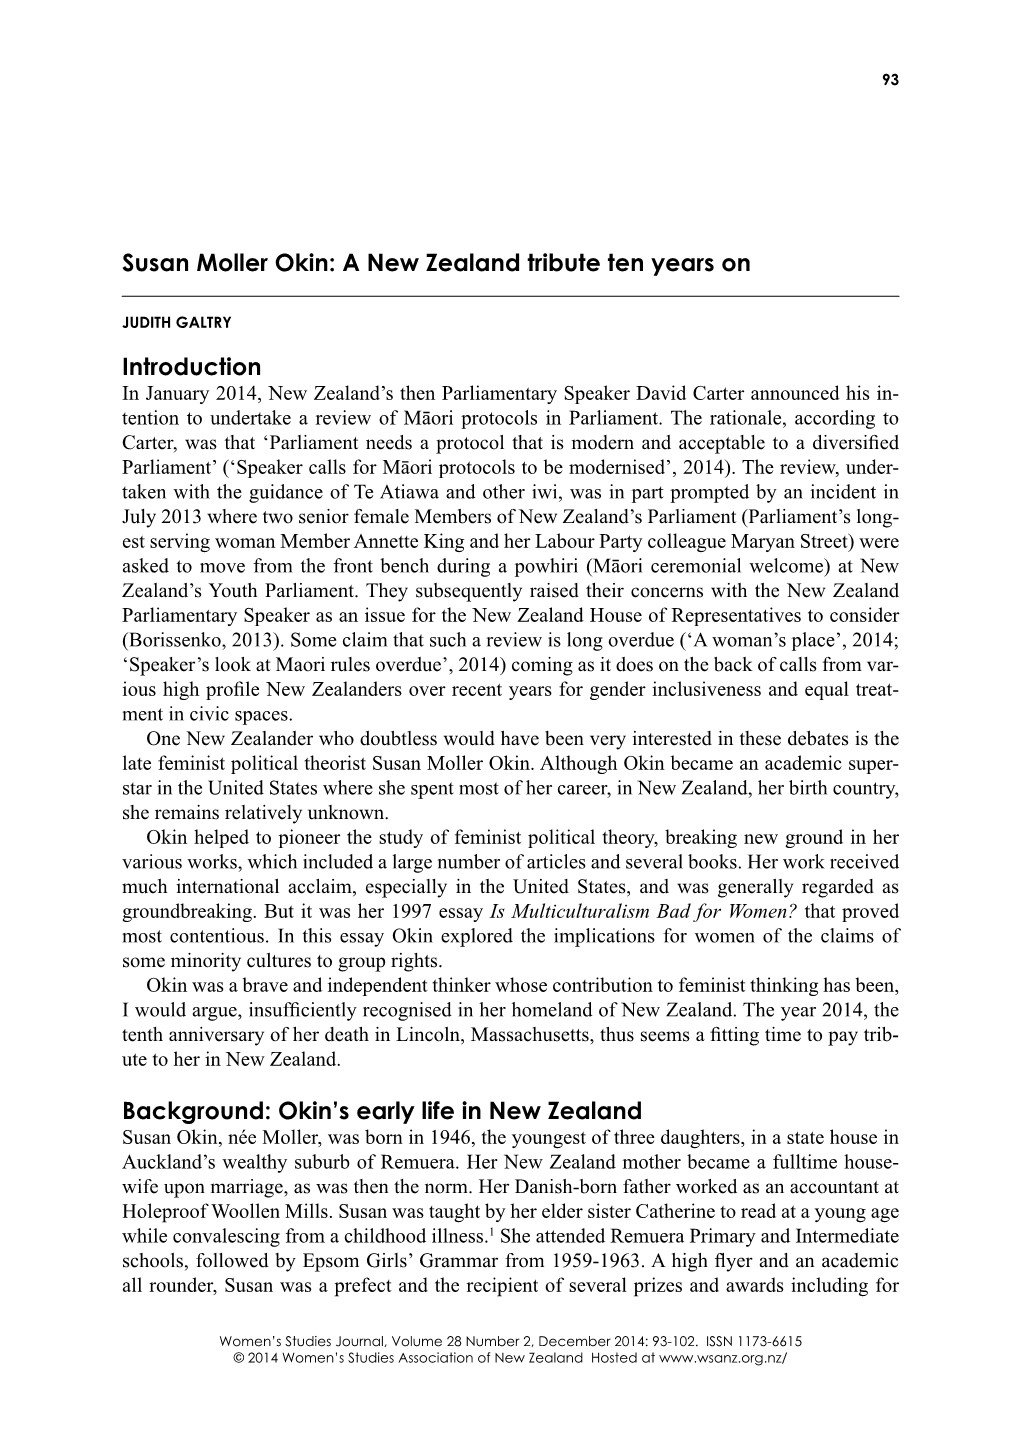 Susan Moller Okin: a New Zealand Tribute Ten Years On